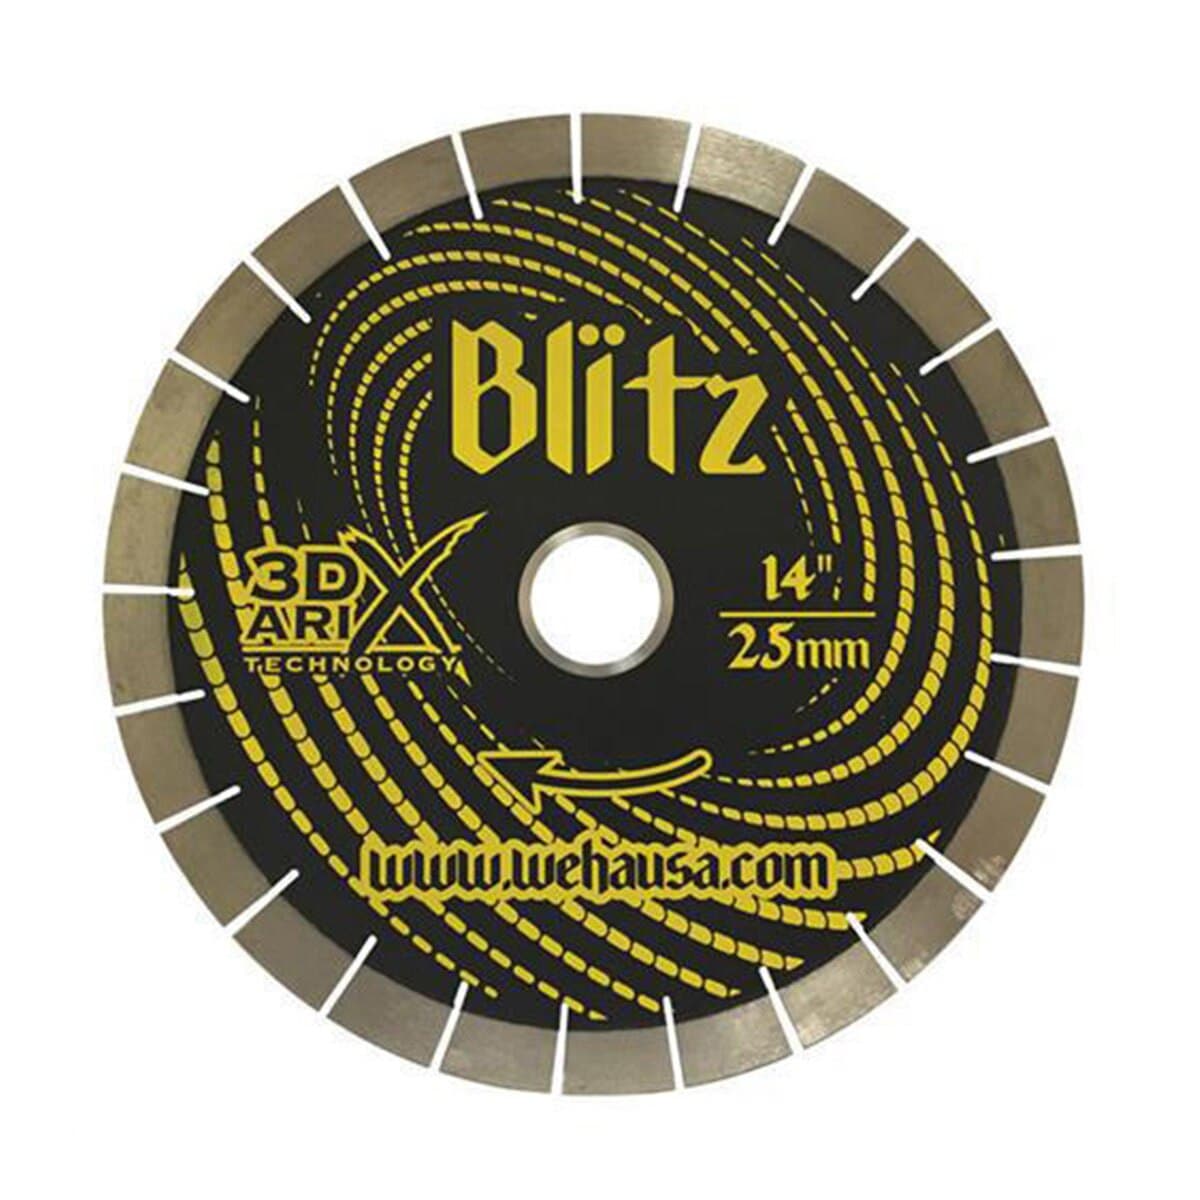 Blitz 18" X 25mm 3DX ARIX Technology Bridge Saw Blade - Diamond Tool Store